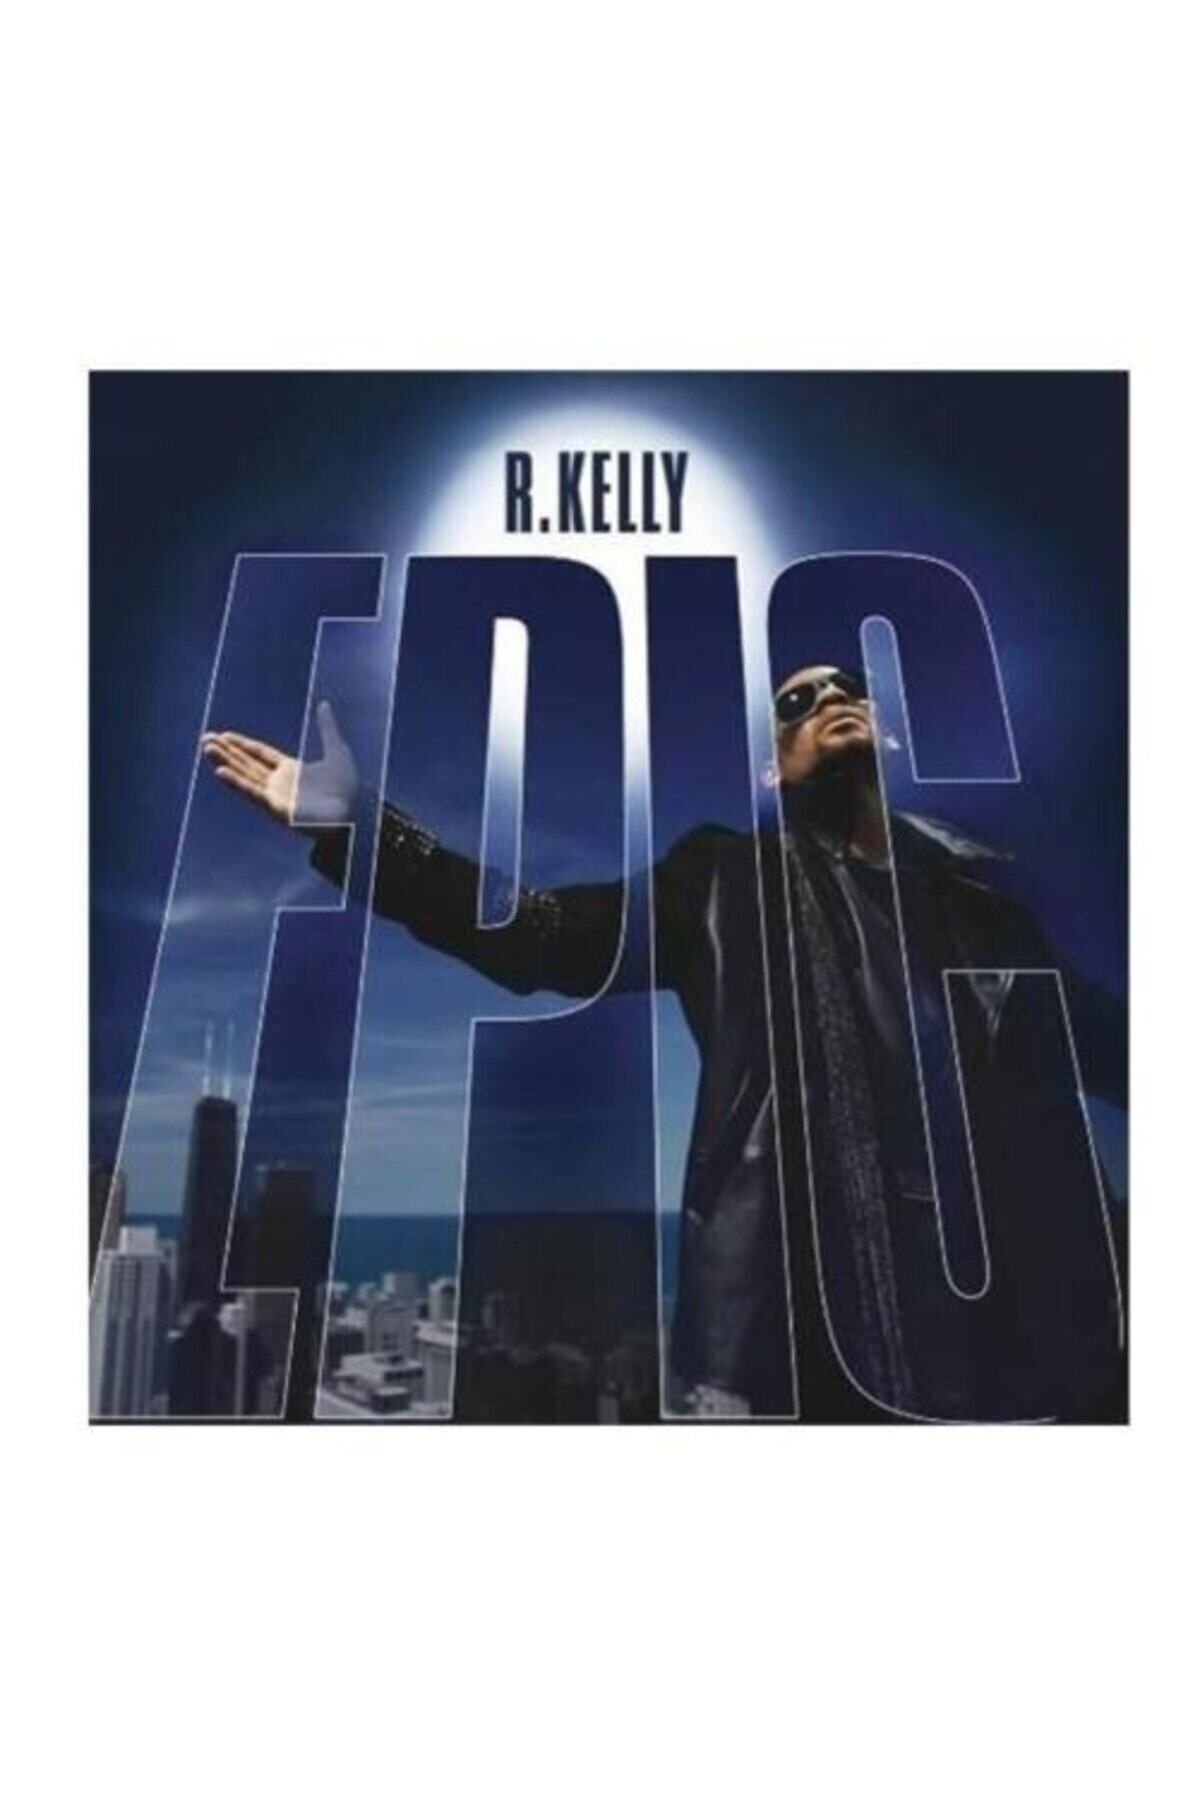 CD R. Kelly - Epic (CD)